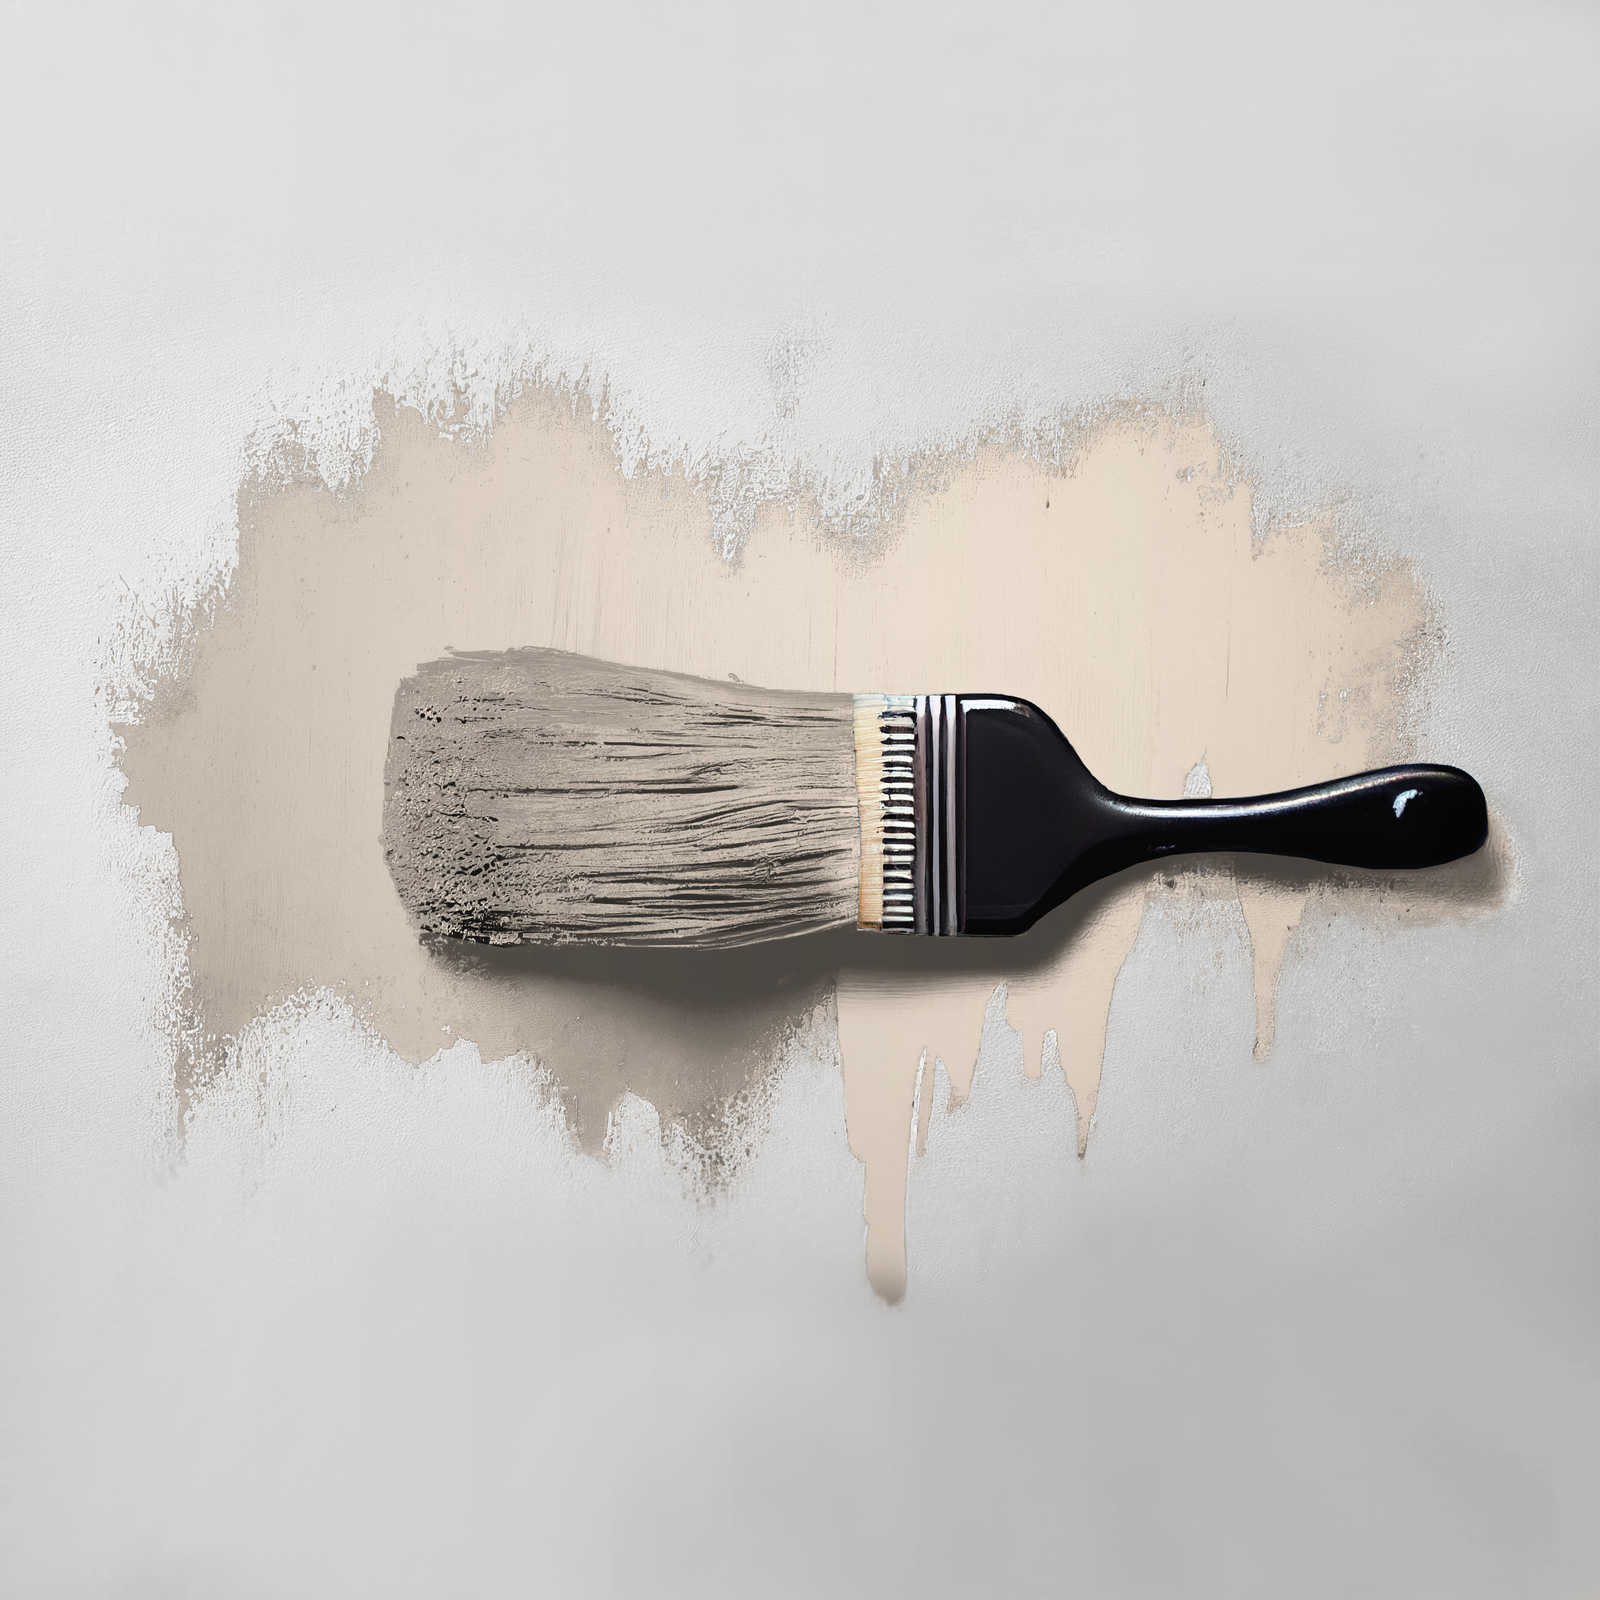             Wall Paint TCK6008 »Pure Pampas« in delicate beige – 5.0 litre
        